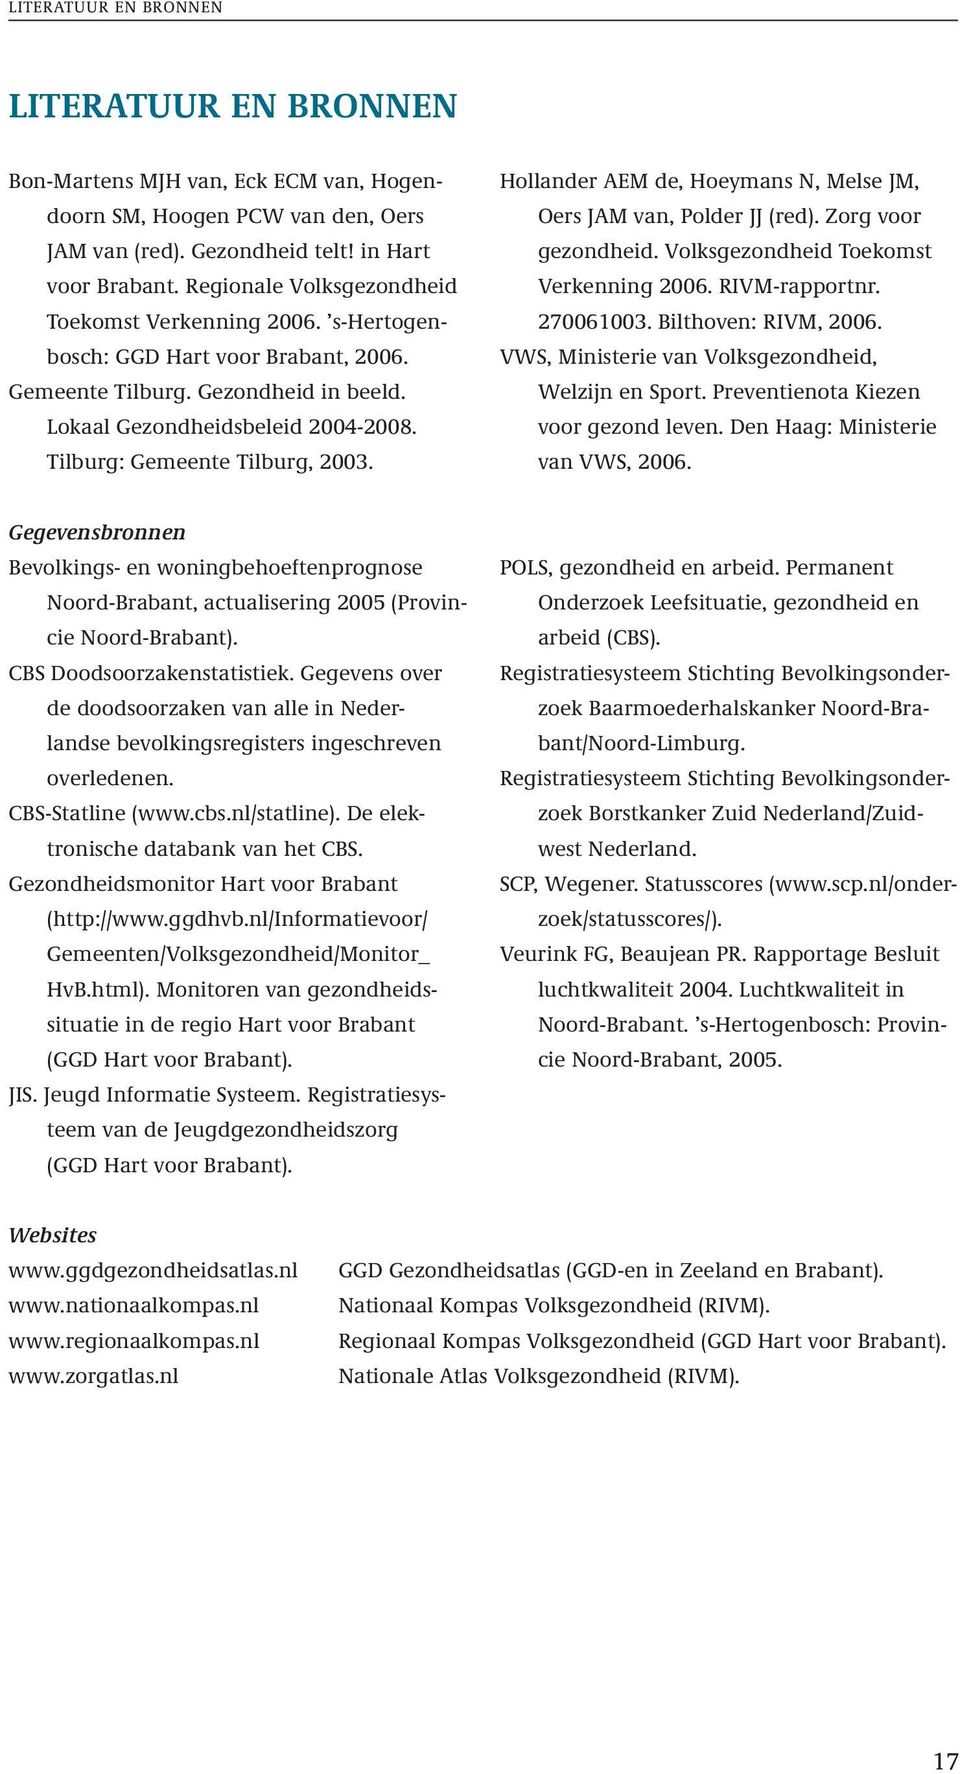 Tilburg: Gemeente Tilburg, 2003. Hollander AEM de, Hoeymans N, Melse JM, Oers JAM van, Polder JJ (red). Zorg voor gezondheid. Volksgezondheid Toekomst Verkenning 2006. RIVM-rapportnr. 270061003.